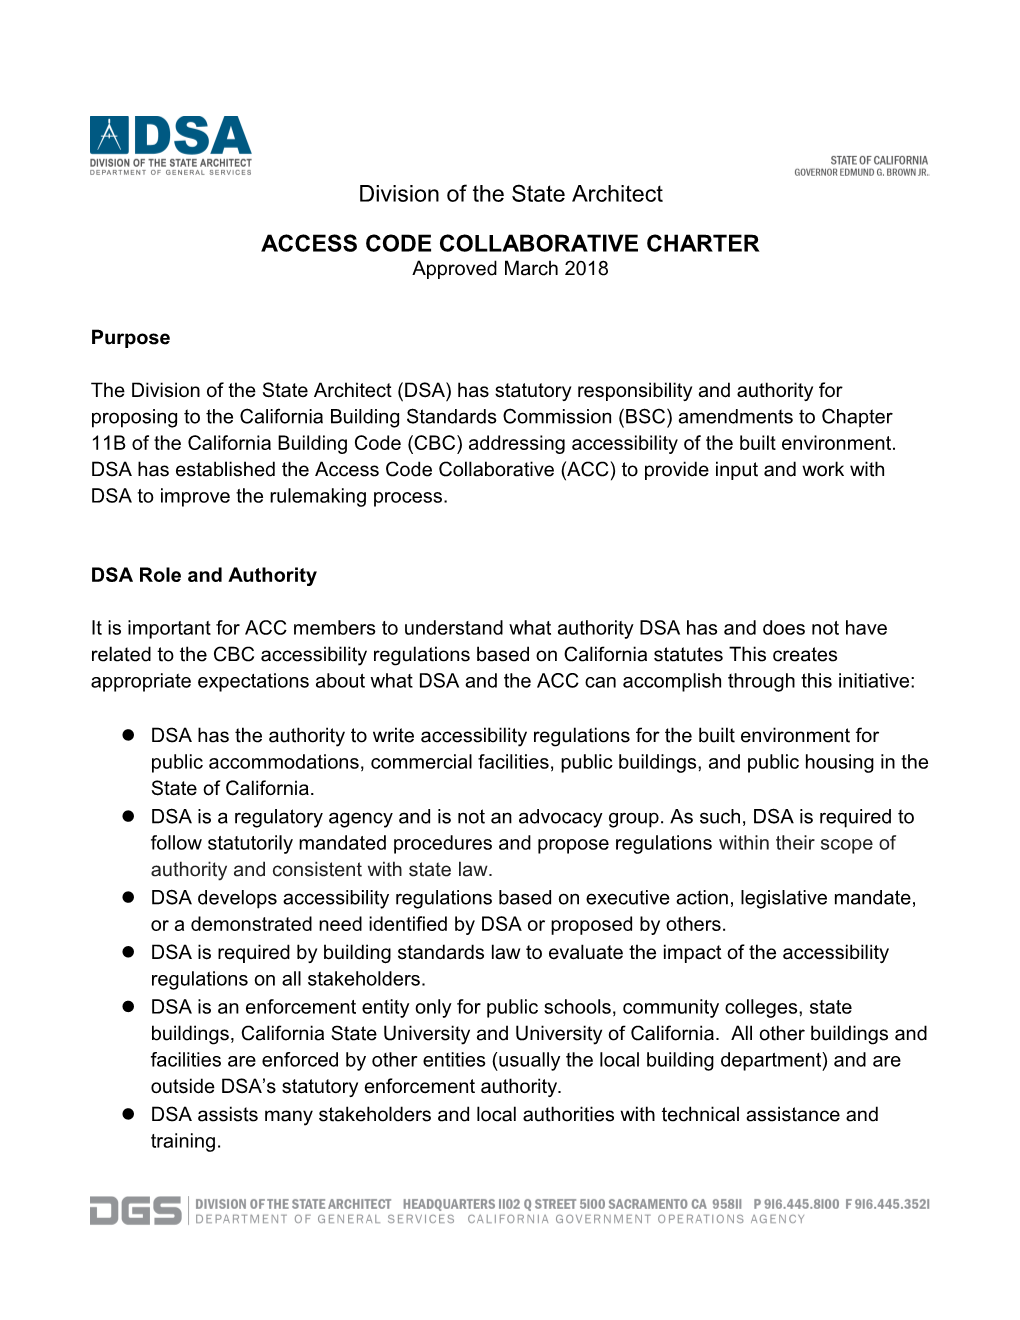 Access Code Collaborative Charter